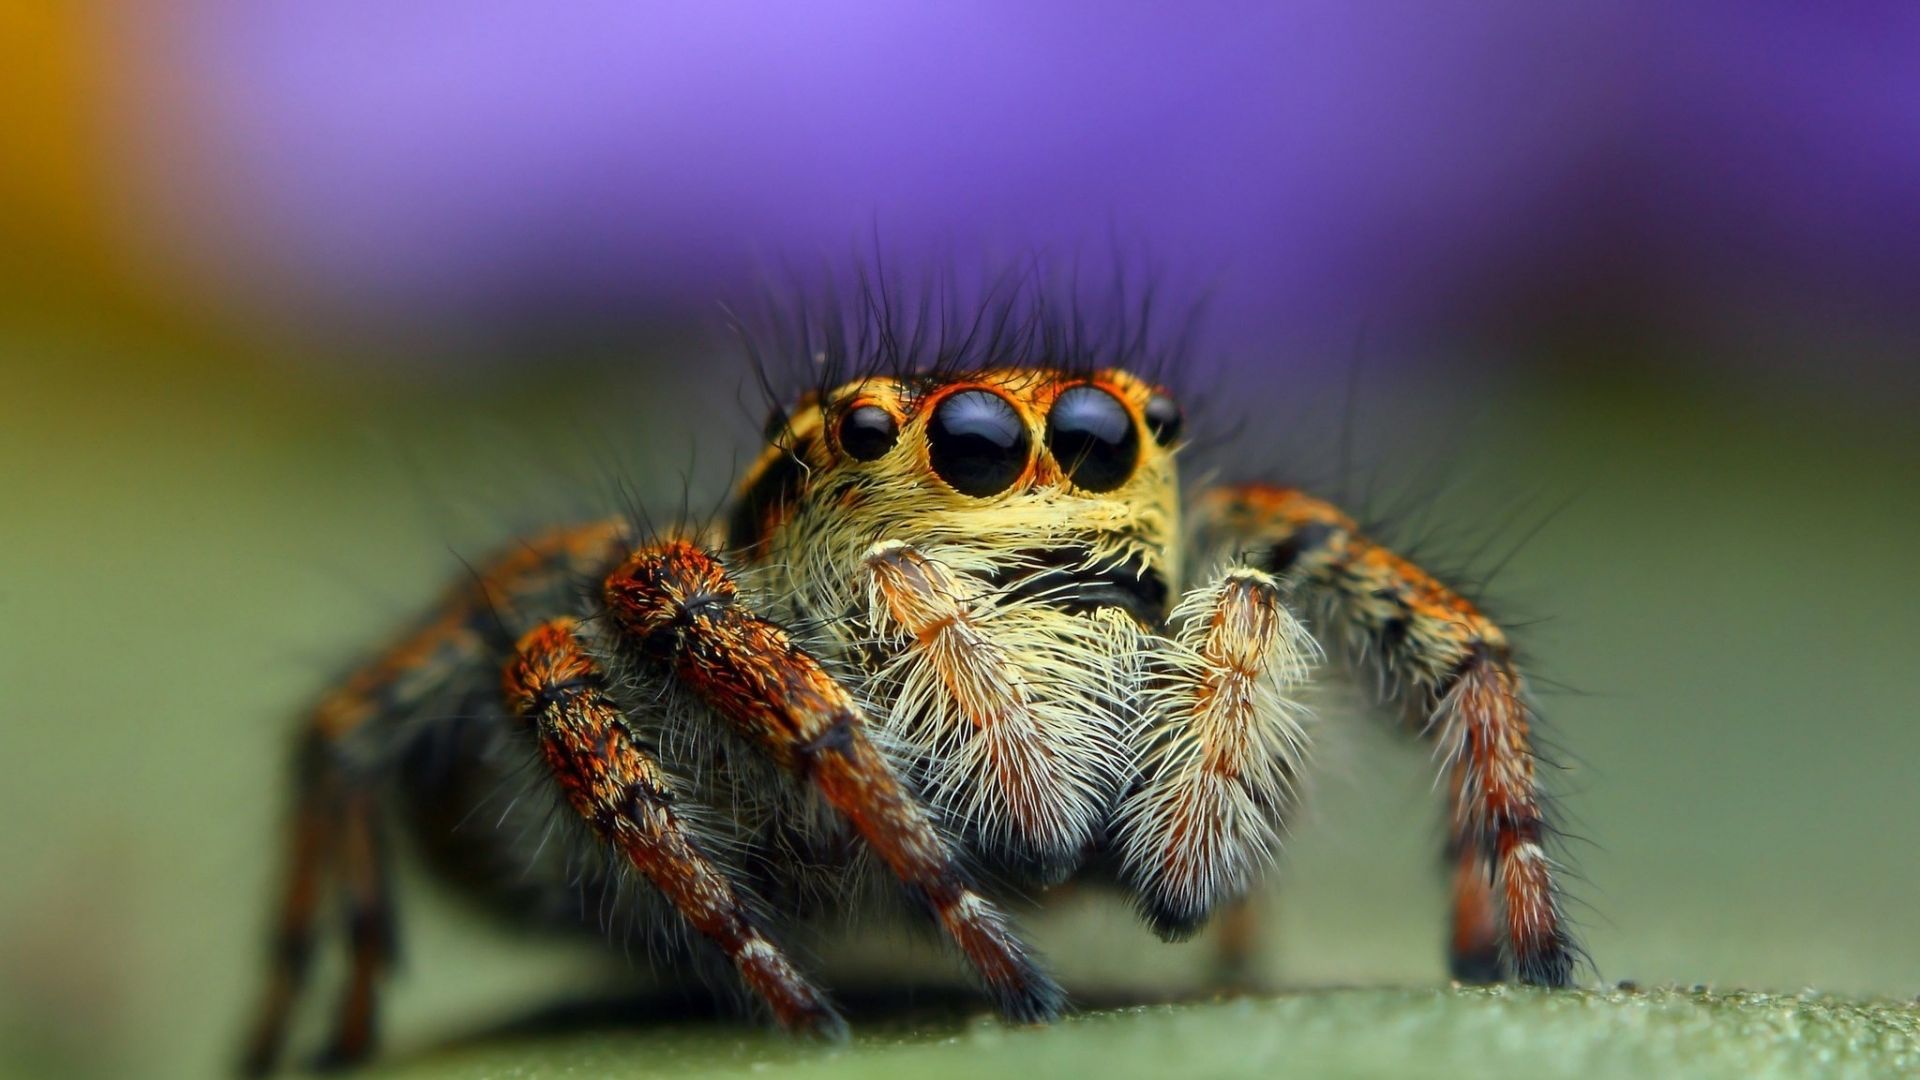 Wallpaper Spider close up 